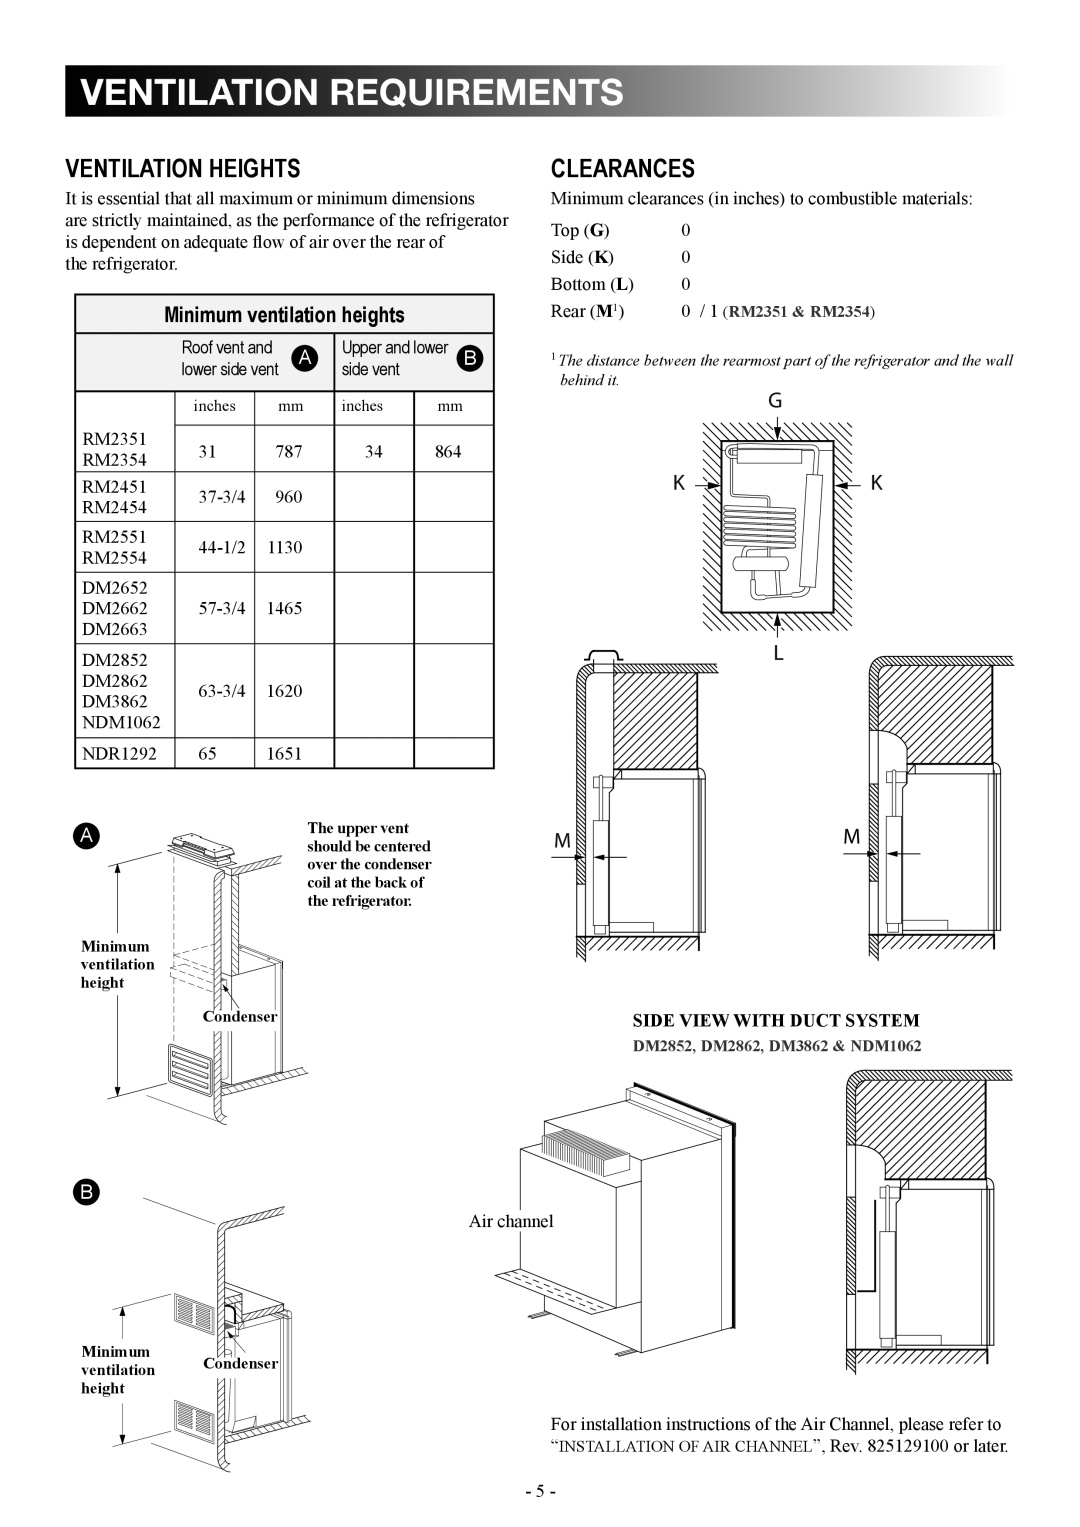 Dometic DM2862 manual Ventilation requirements, Ventilation heights, Clearances, Minimum ventilation heights 